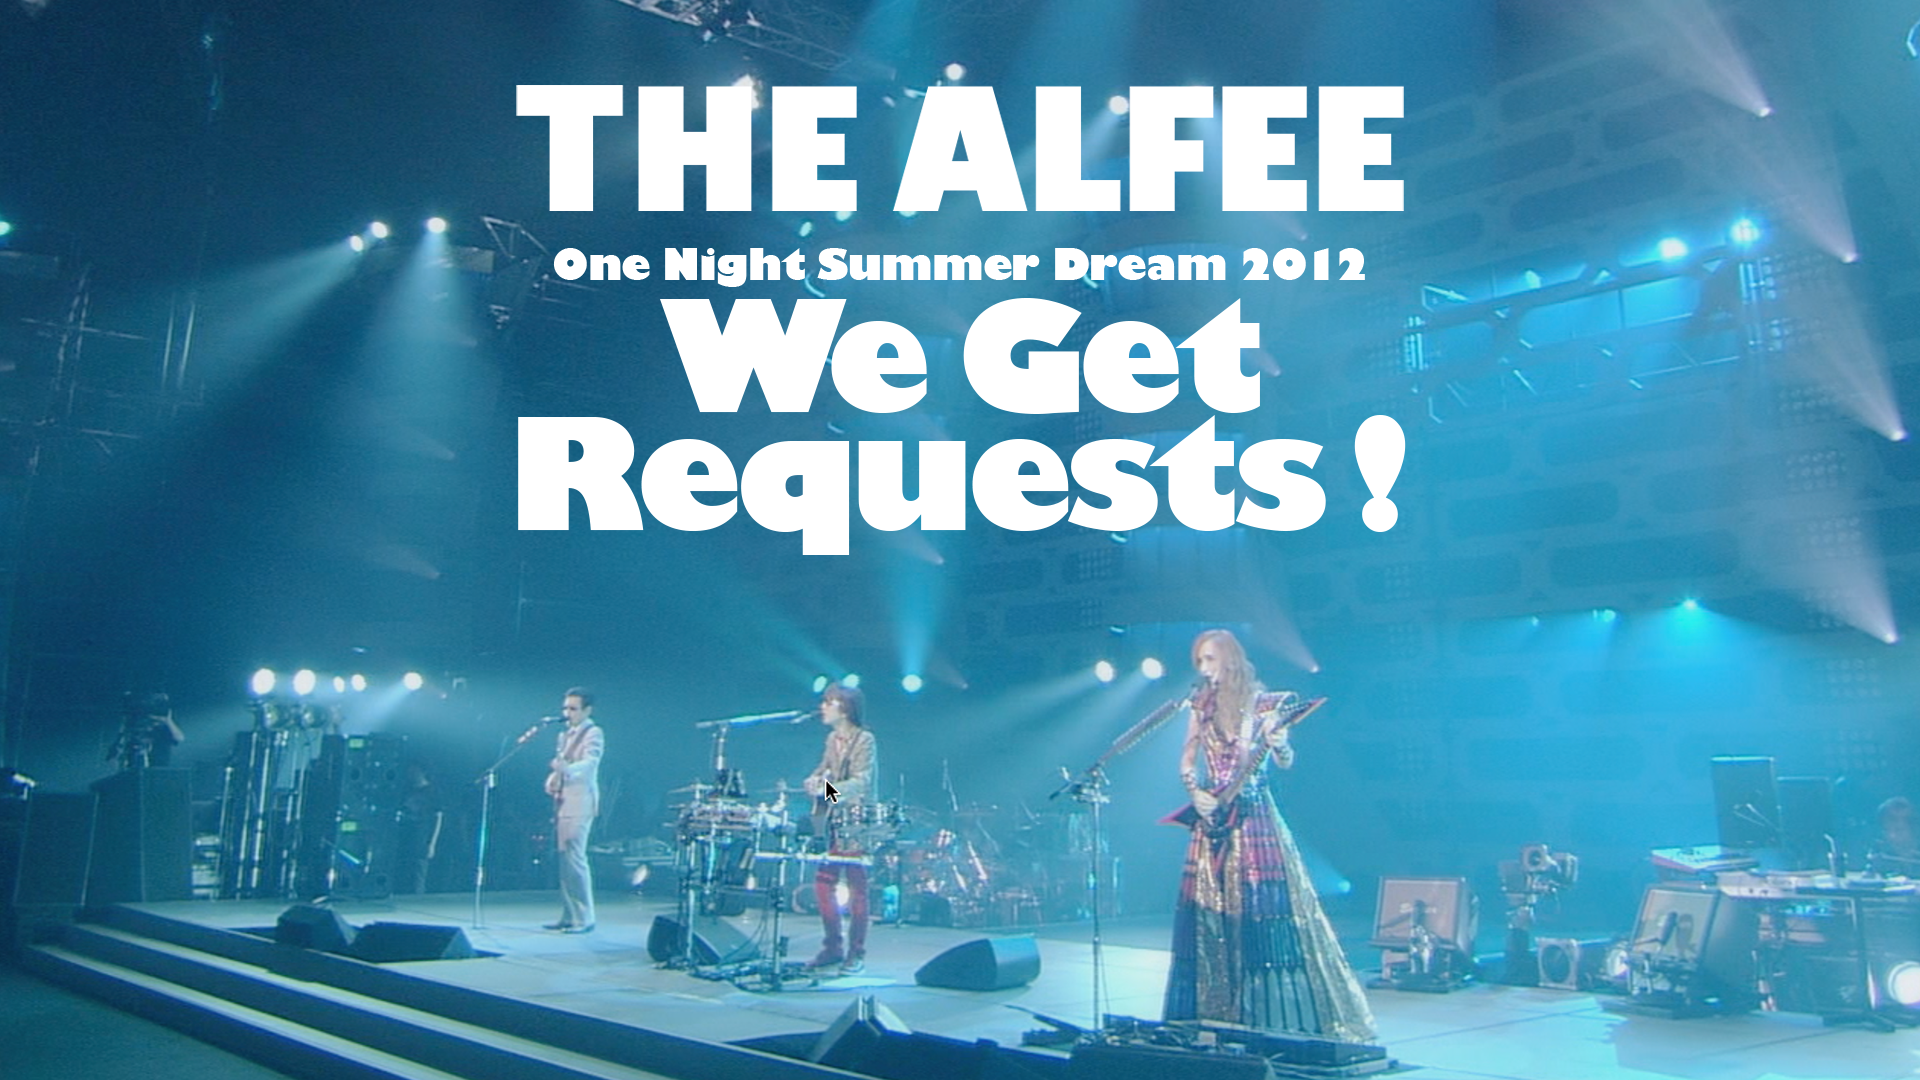 THE ALFEE One Night Summer Dream 2012 We Get Requests!(音楽・ライブ / 2012) -  動画配信 | U-NEXT 31日間無料トライアル